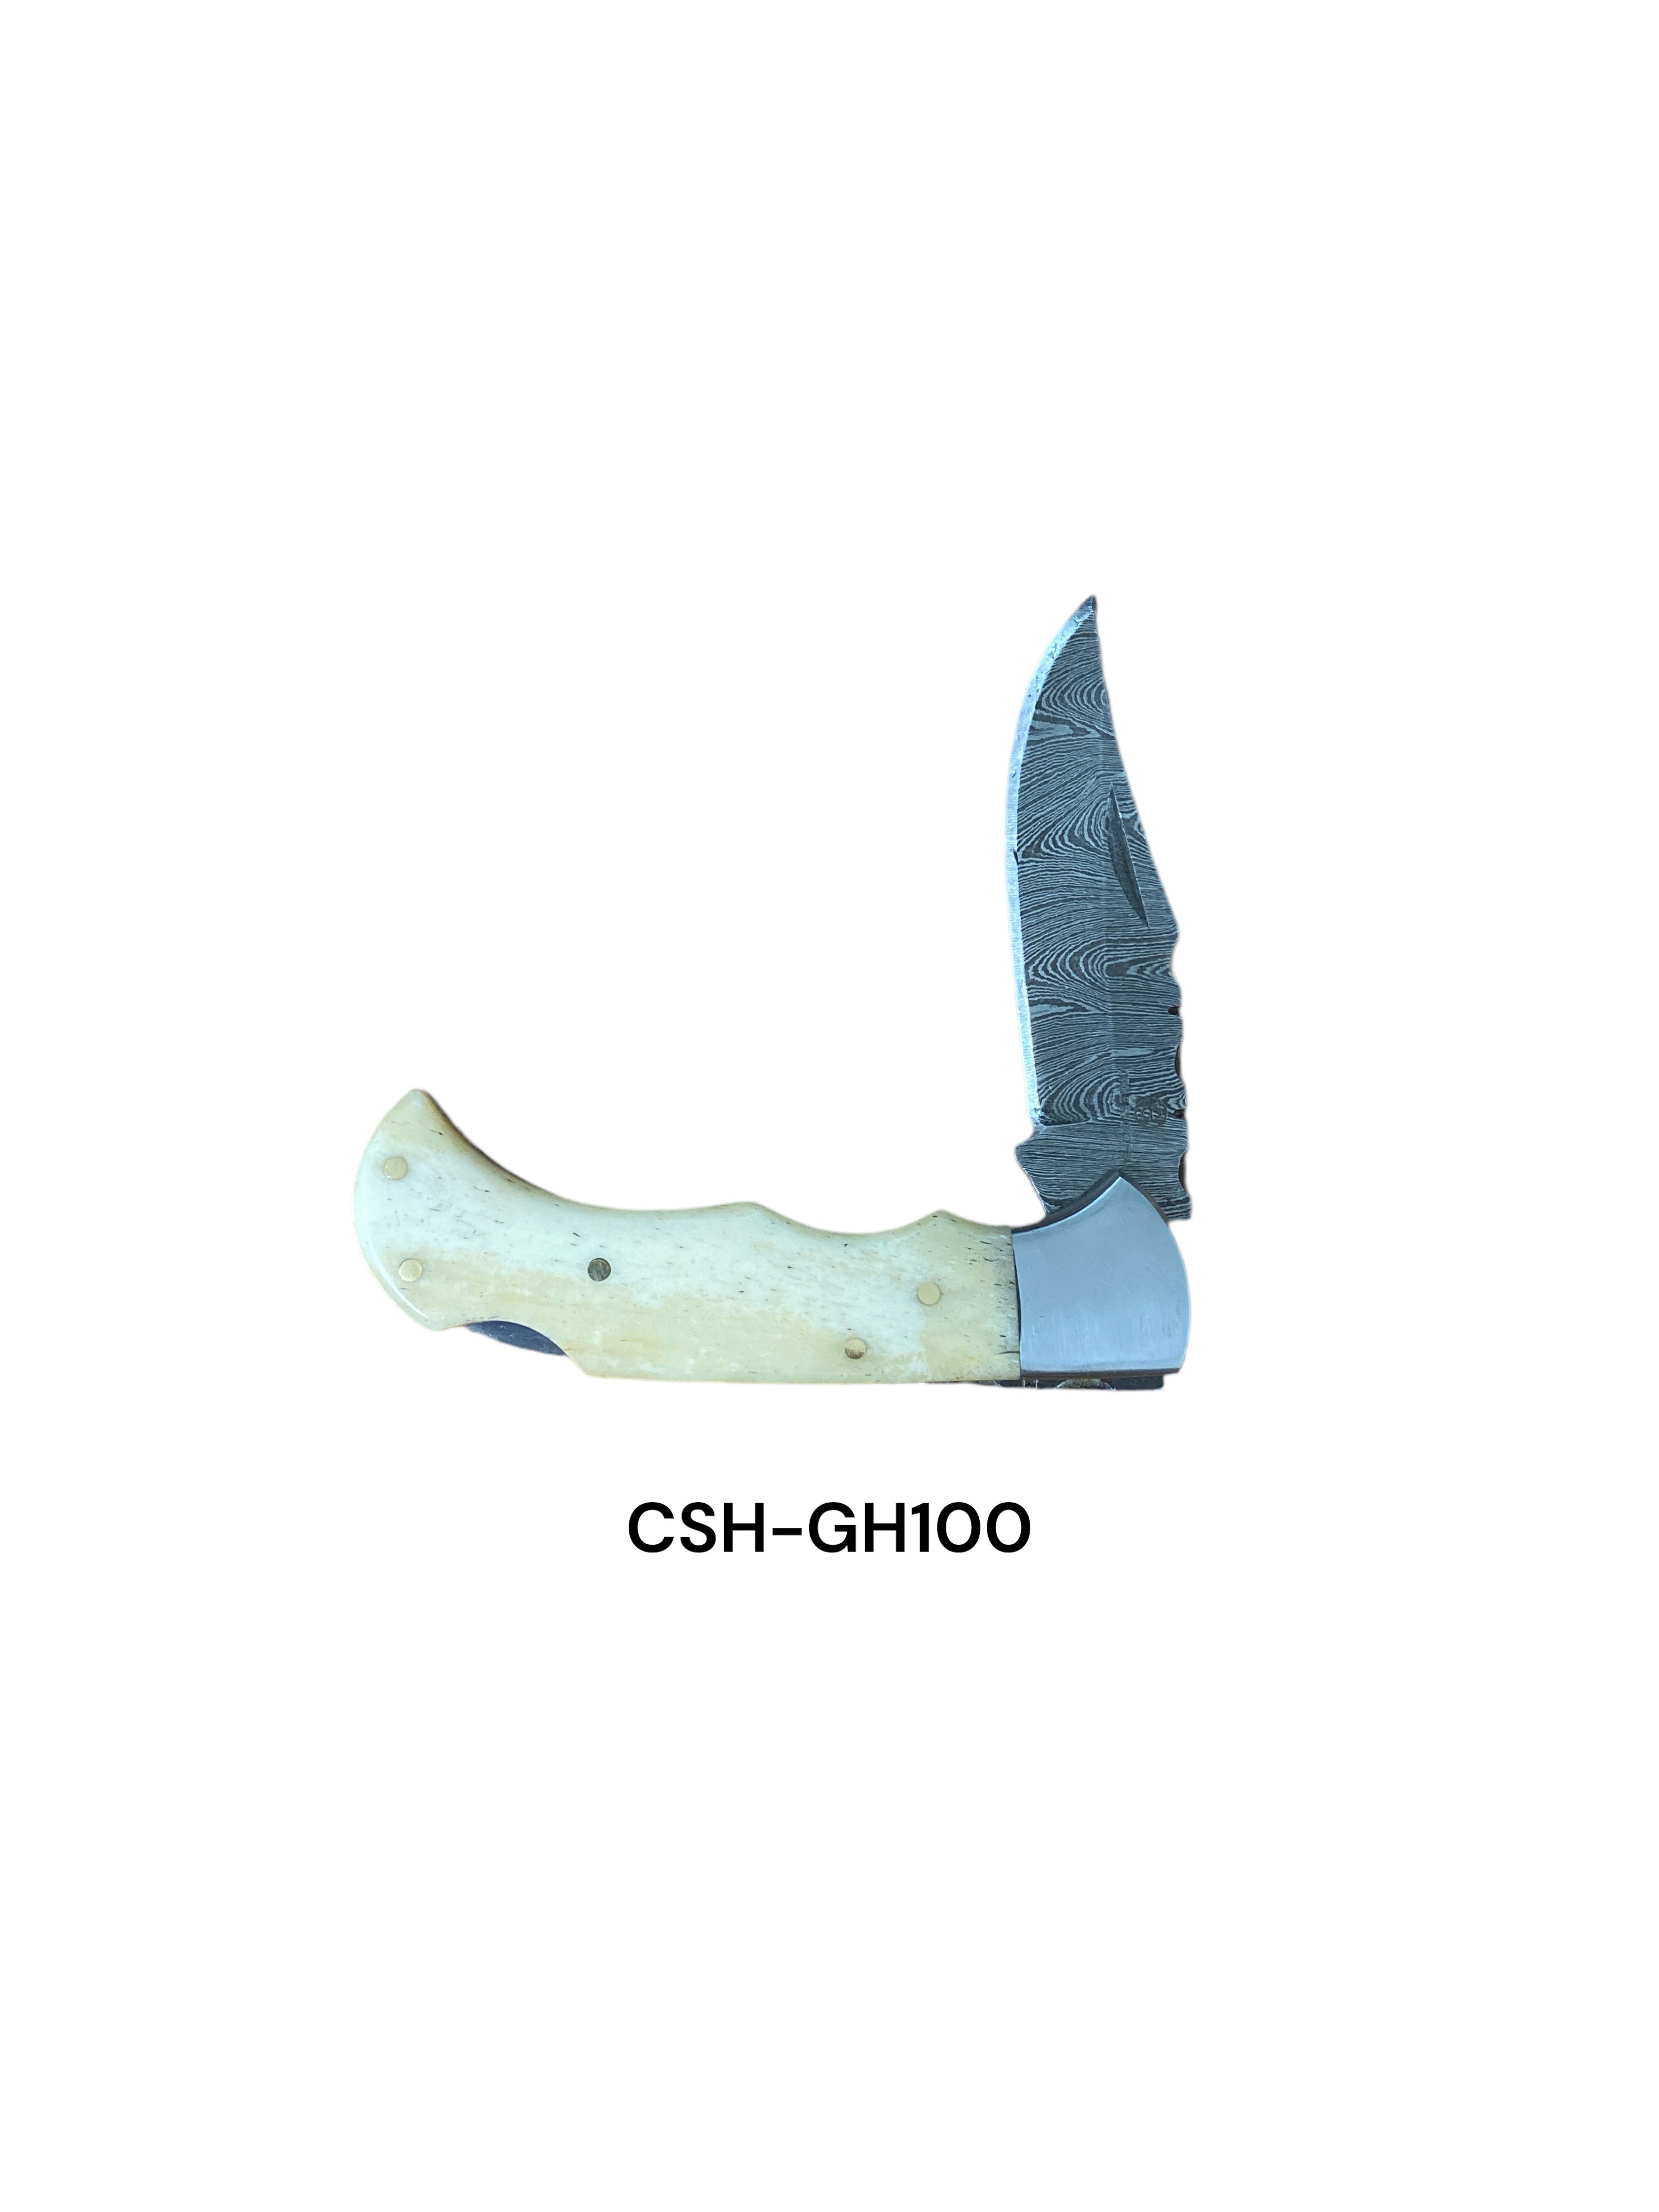 Damascus Bone Lockback Folding Pocket Knife CSH-GH100